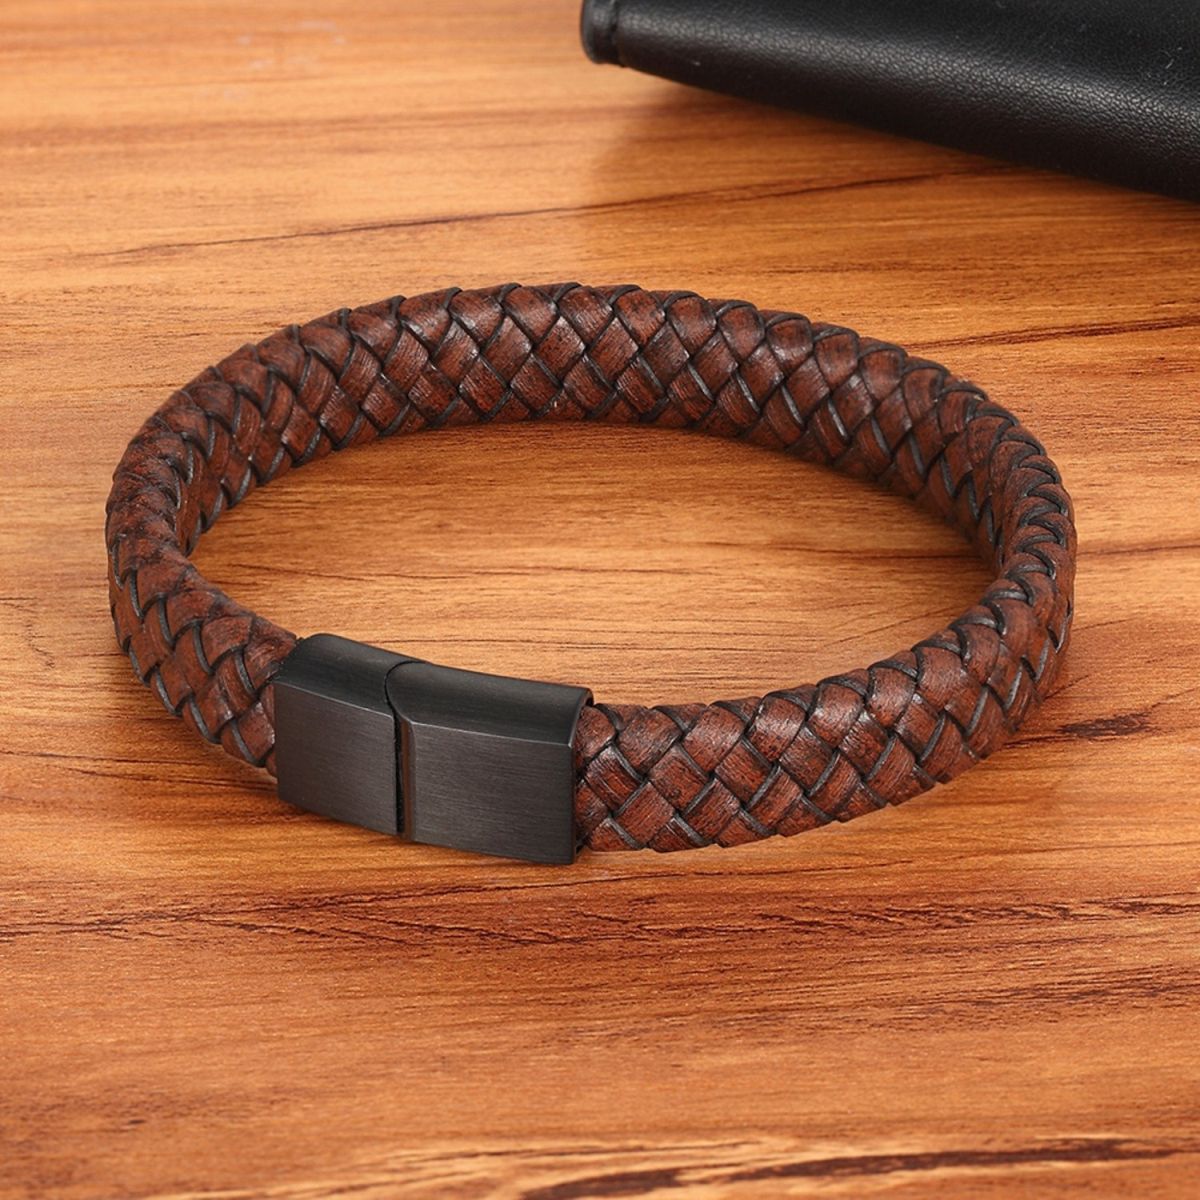 Buy Gold Era Leather Bracelet for Men Brown Stylish Wrist Band Cuff  Bracelets for Boys at Amazonin